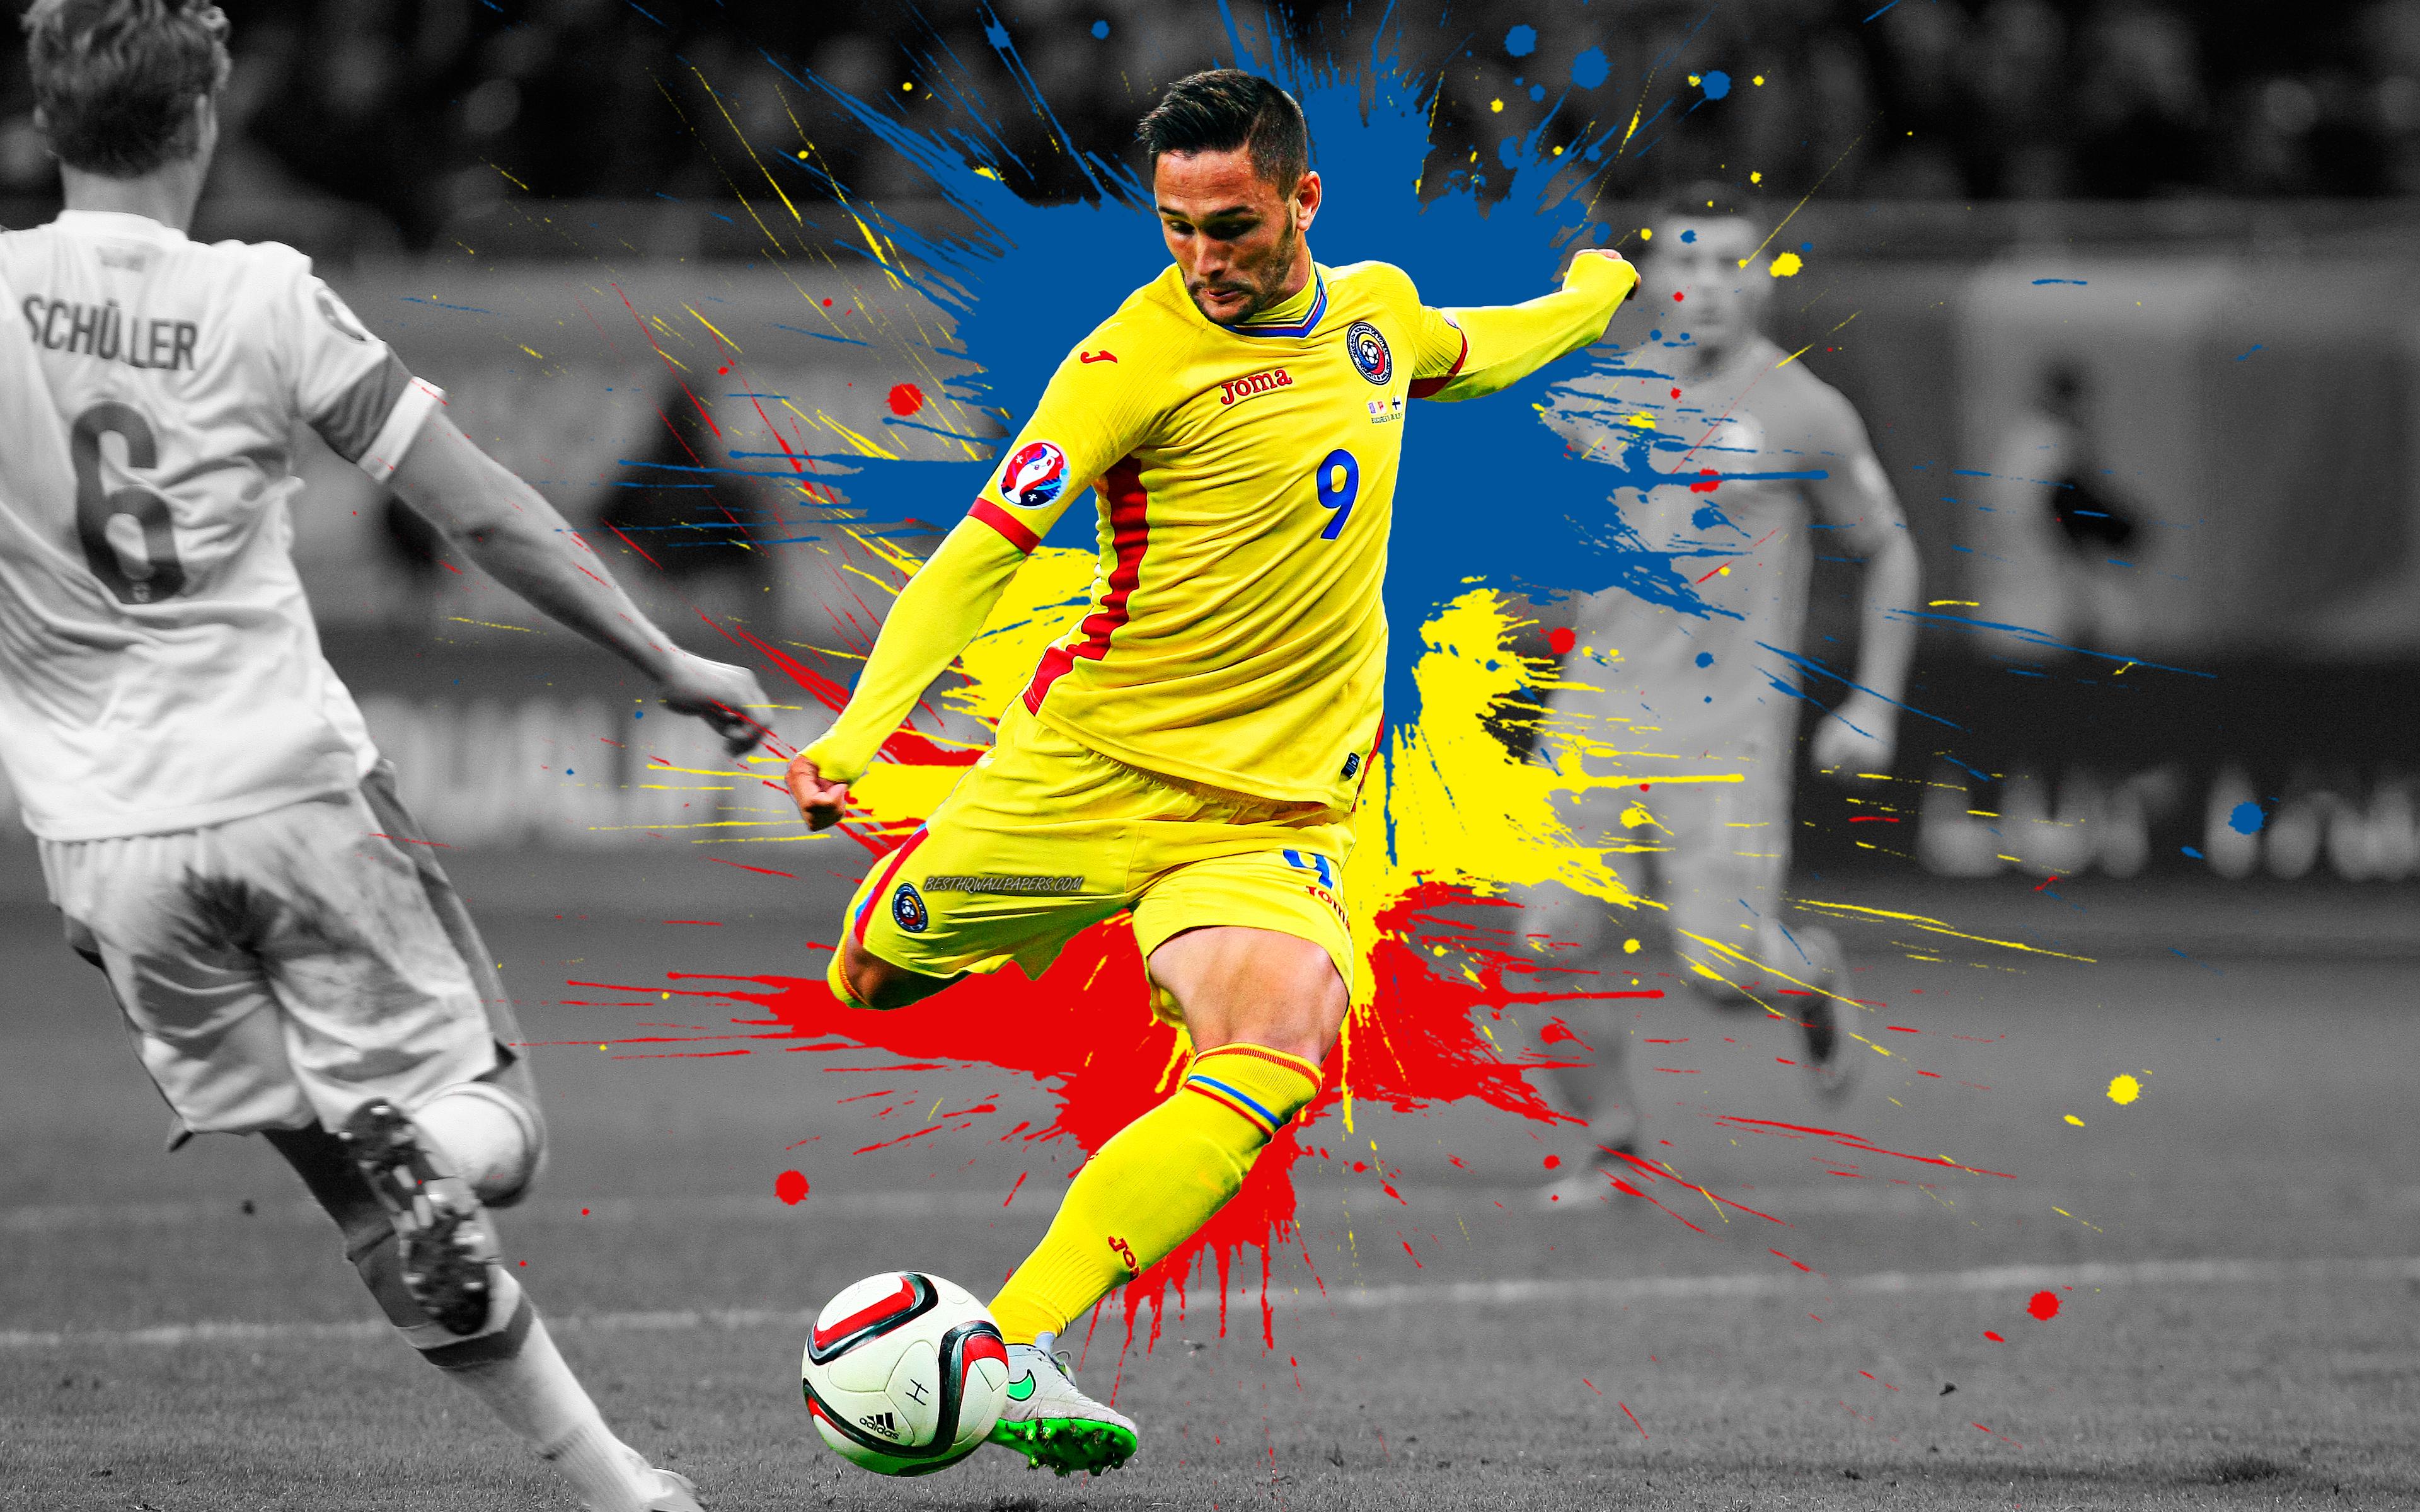 Romania National Football Team Wallpapers